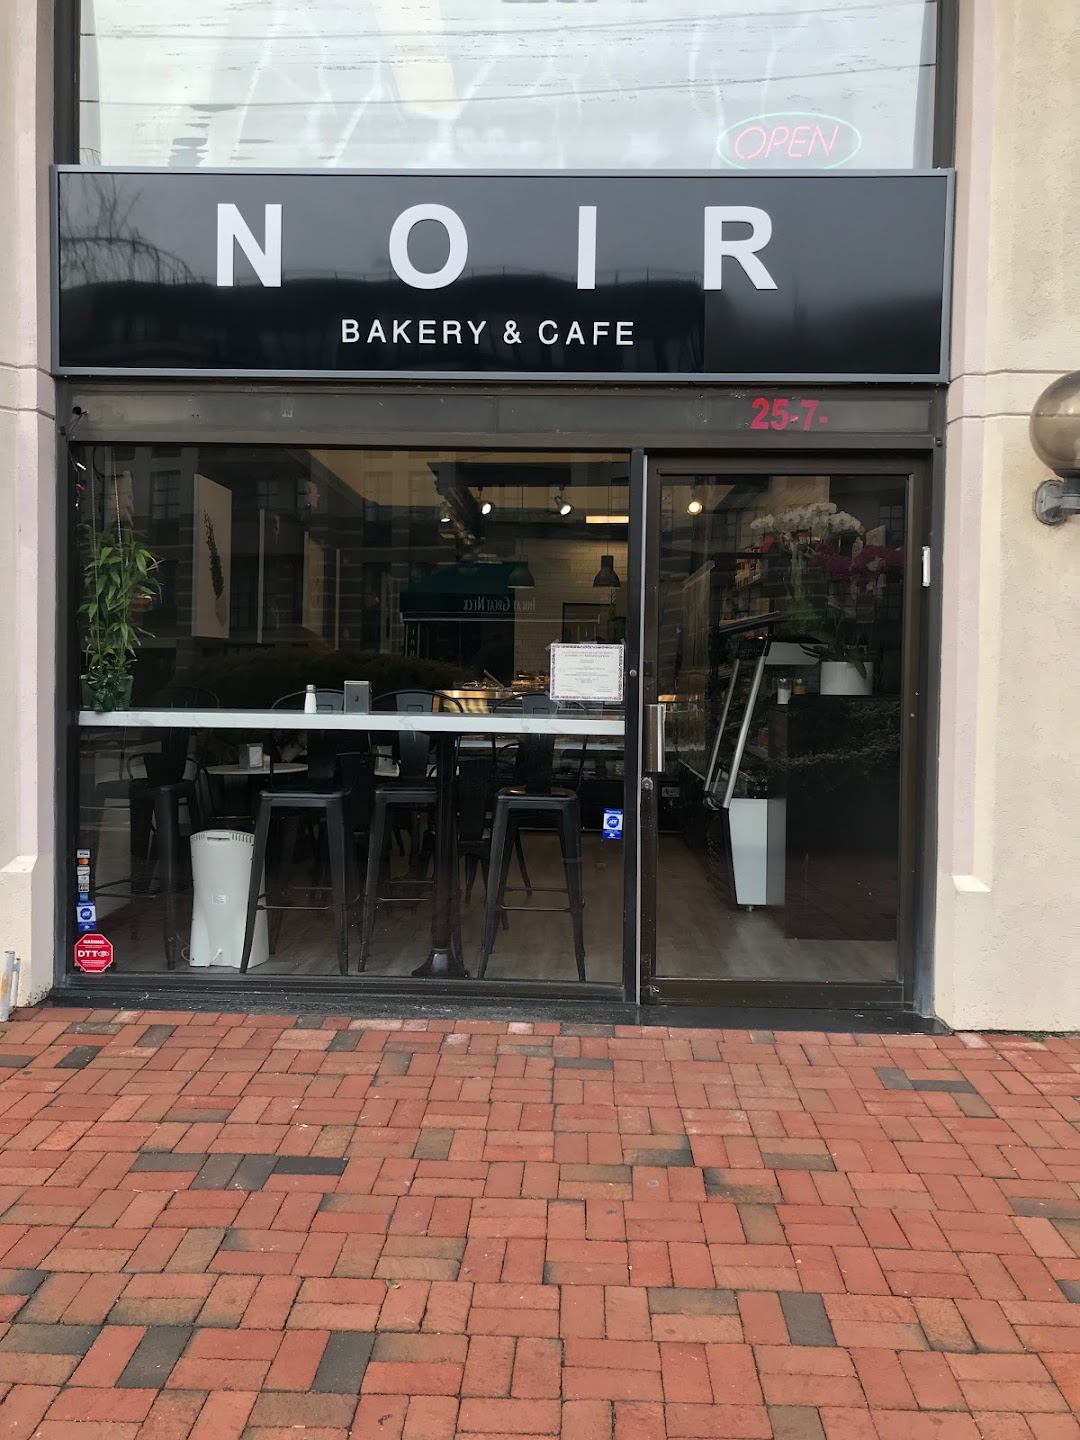 NOIR Bakery & Cafe